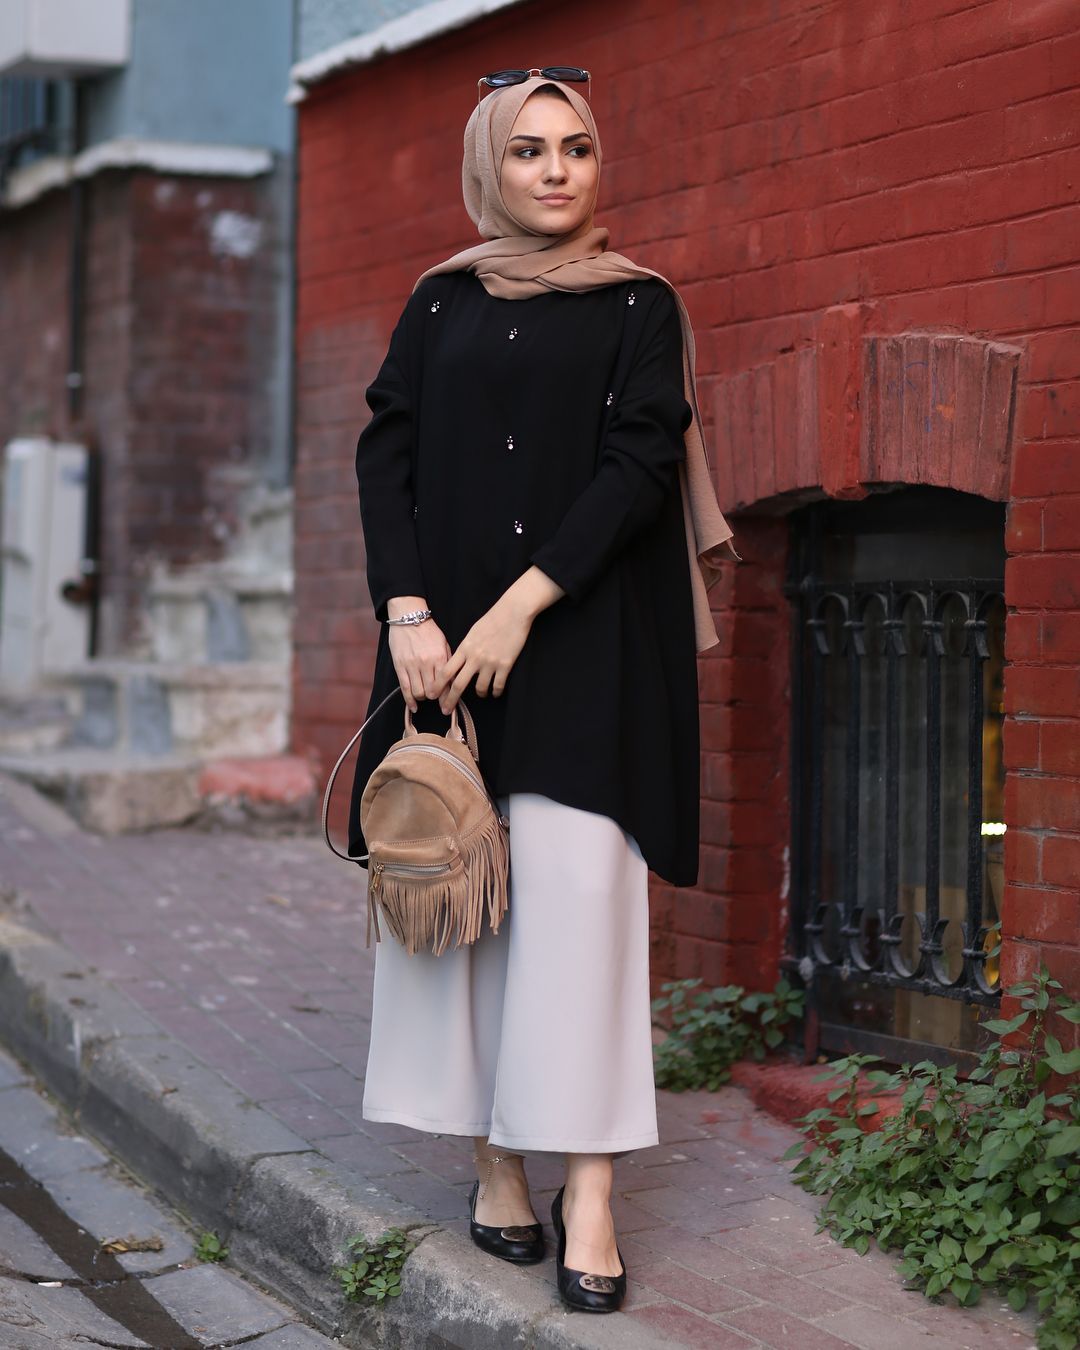 16 style Hijab robe ideas